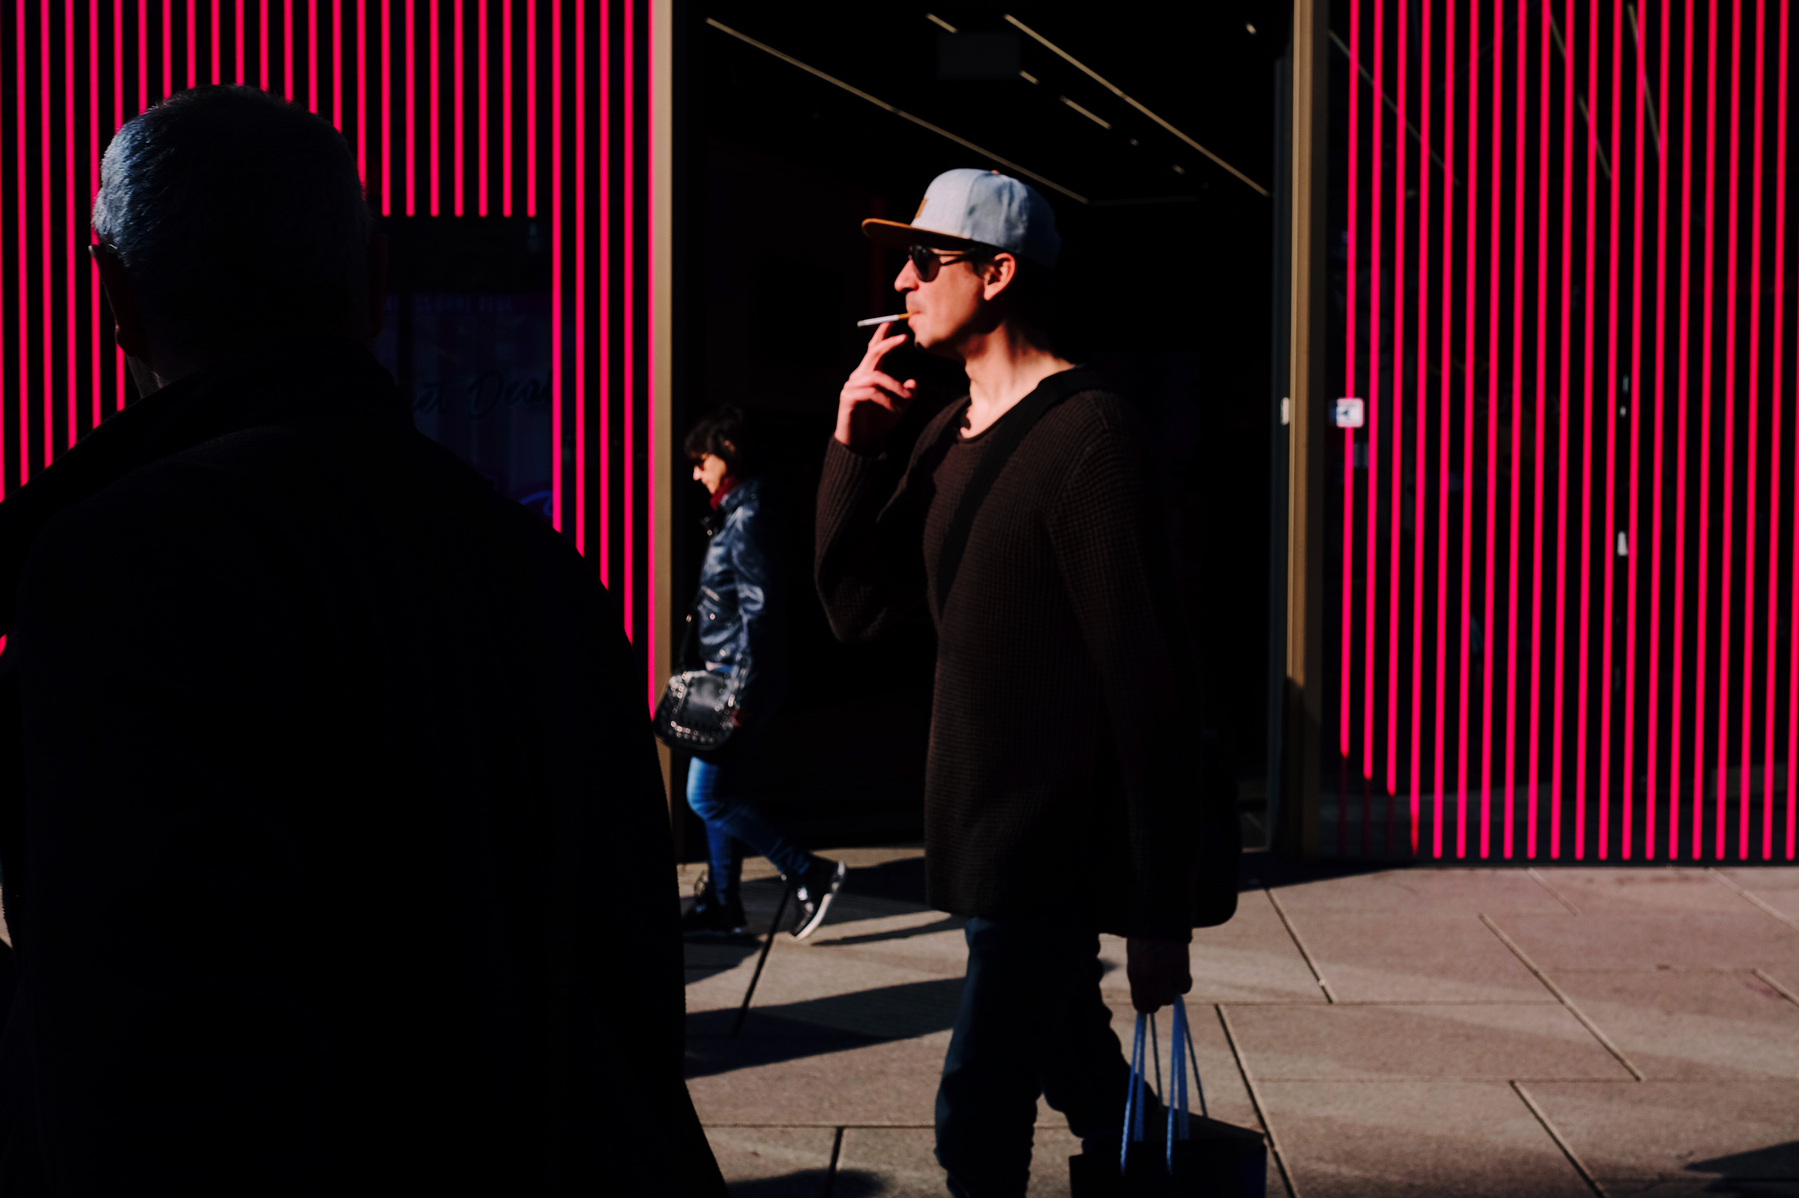 A man walks by, smoking a cigarette. 